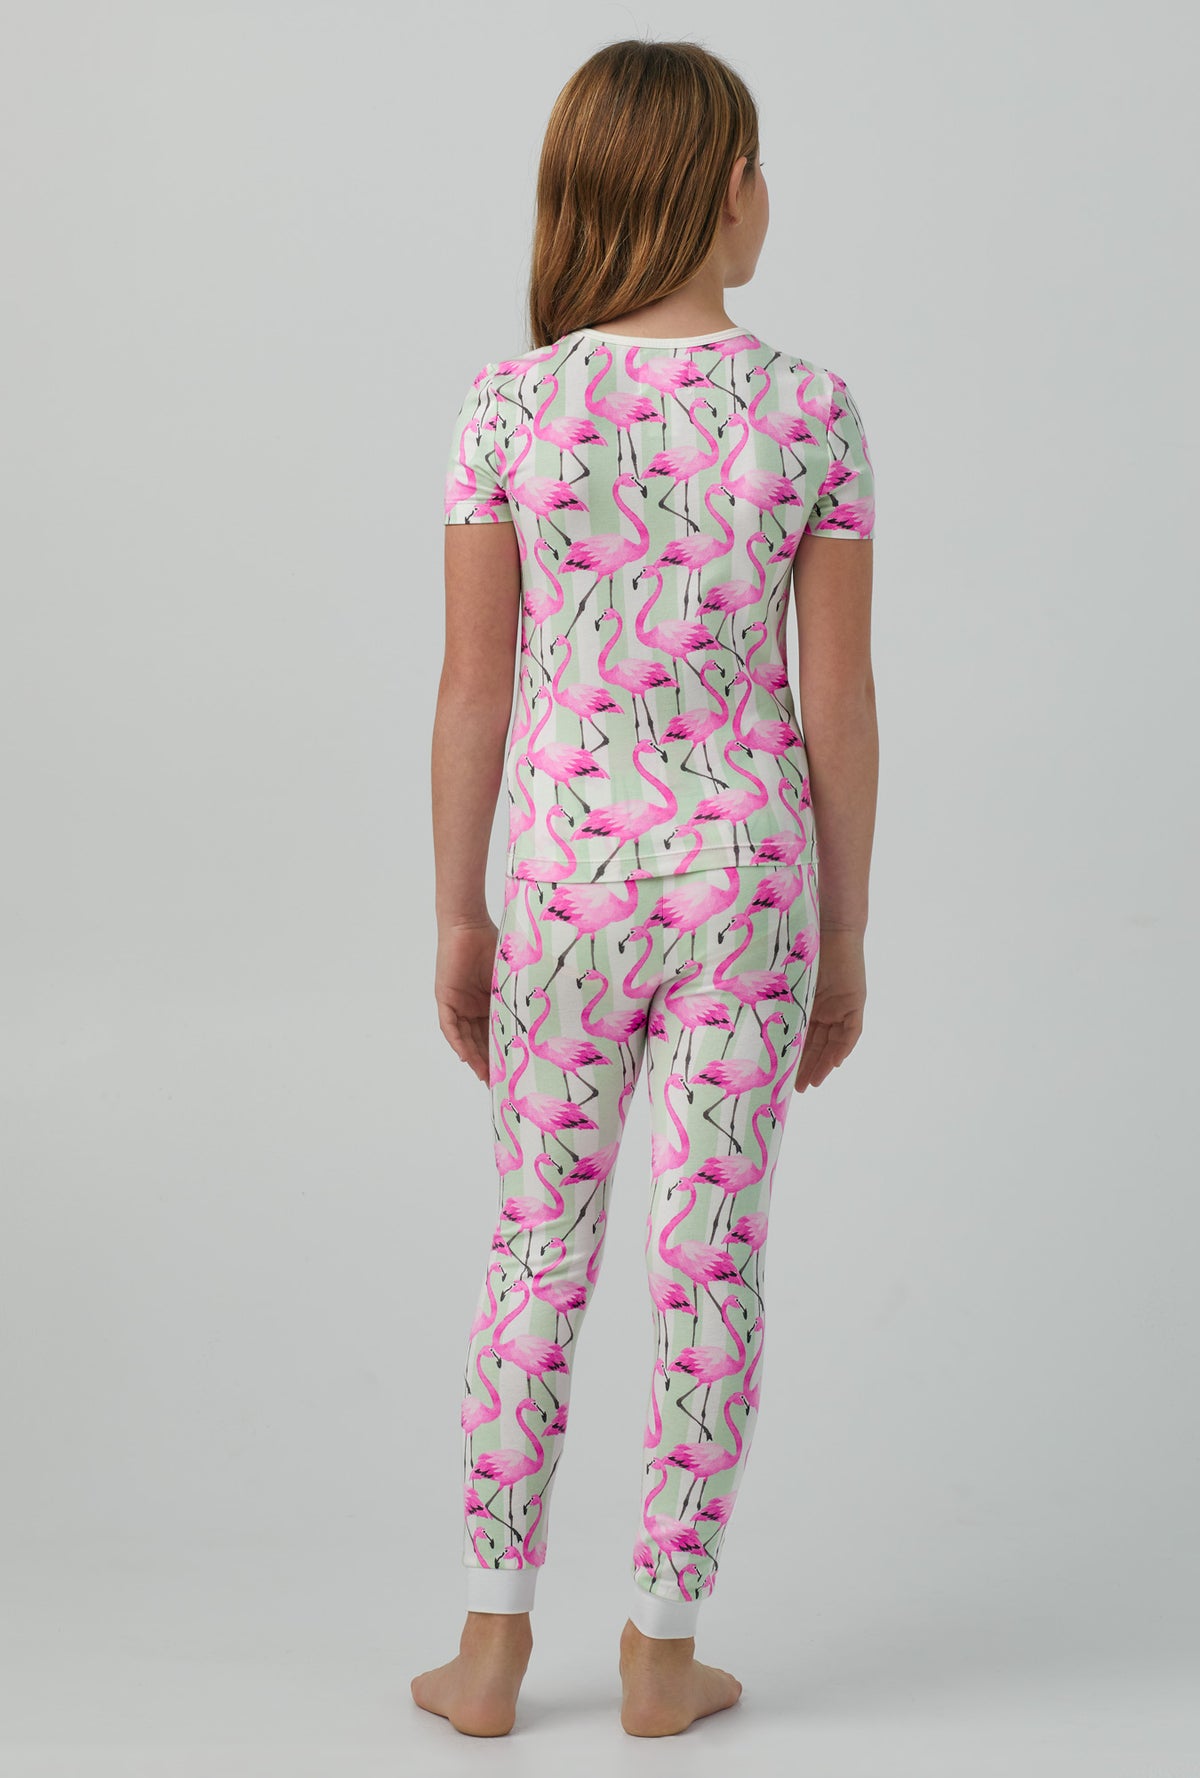 A girl wearing Short Sleeve Stretch Jersey Kids PJ Set with  Flamingo Bay print